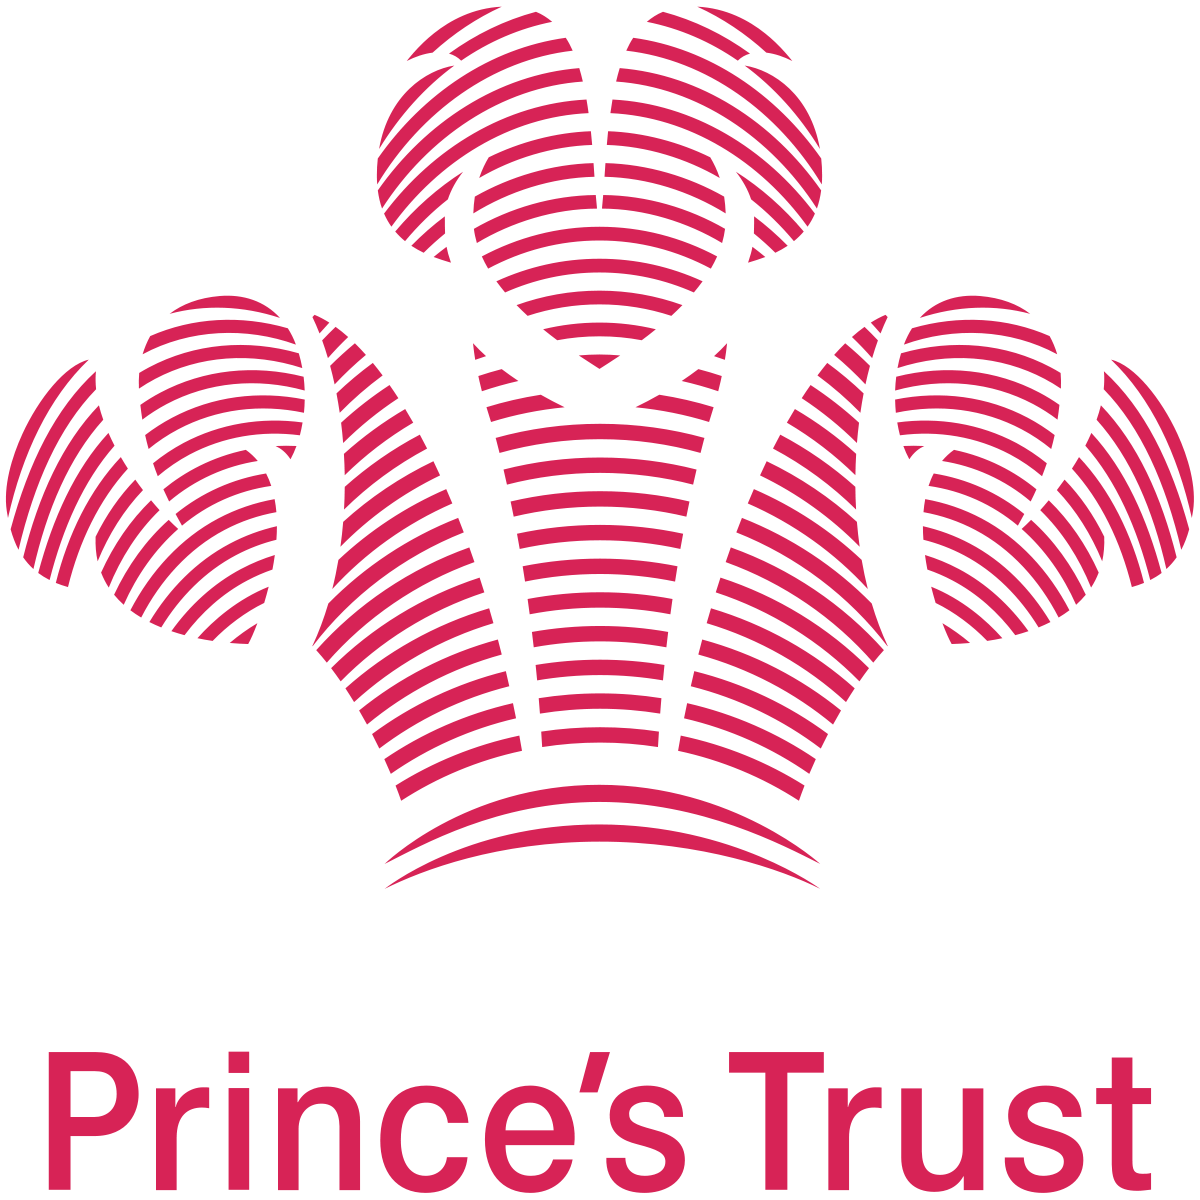 Description: File:The Prince's Trust.svg